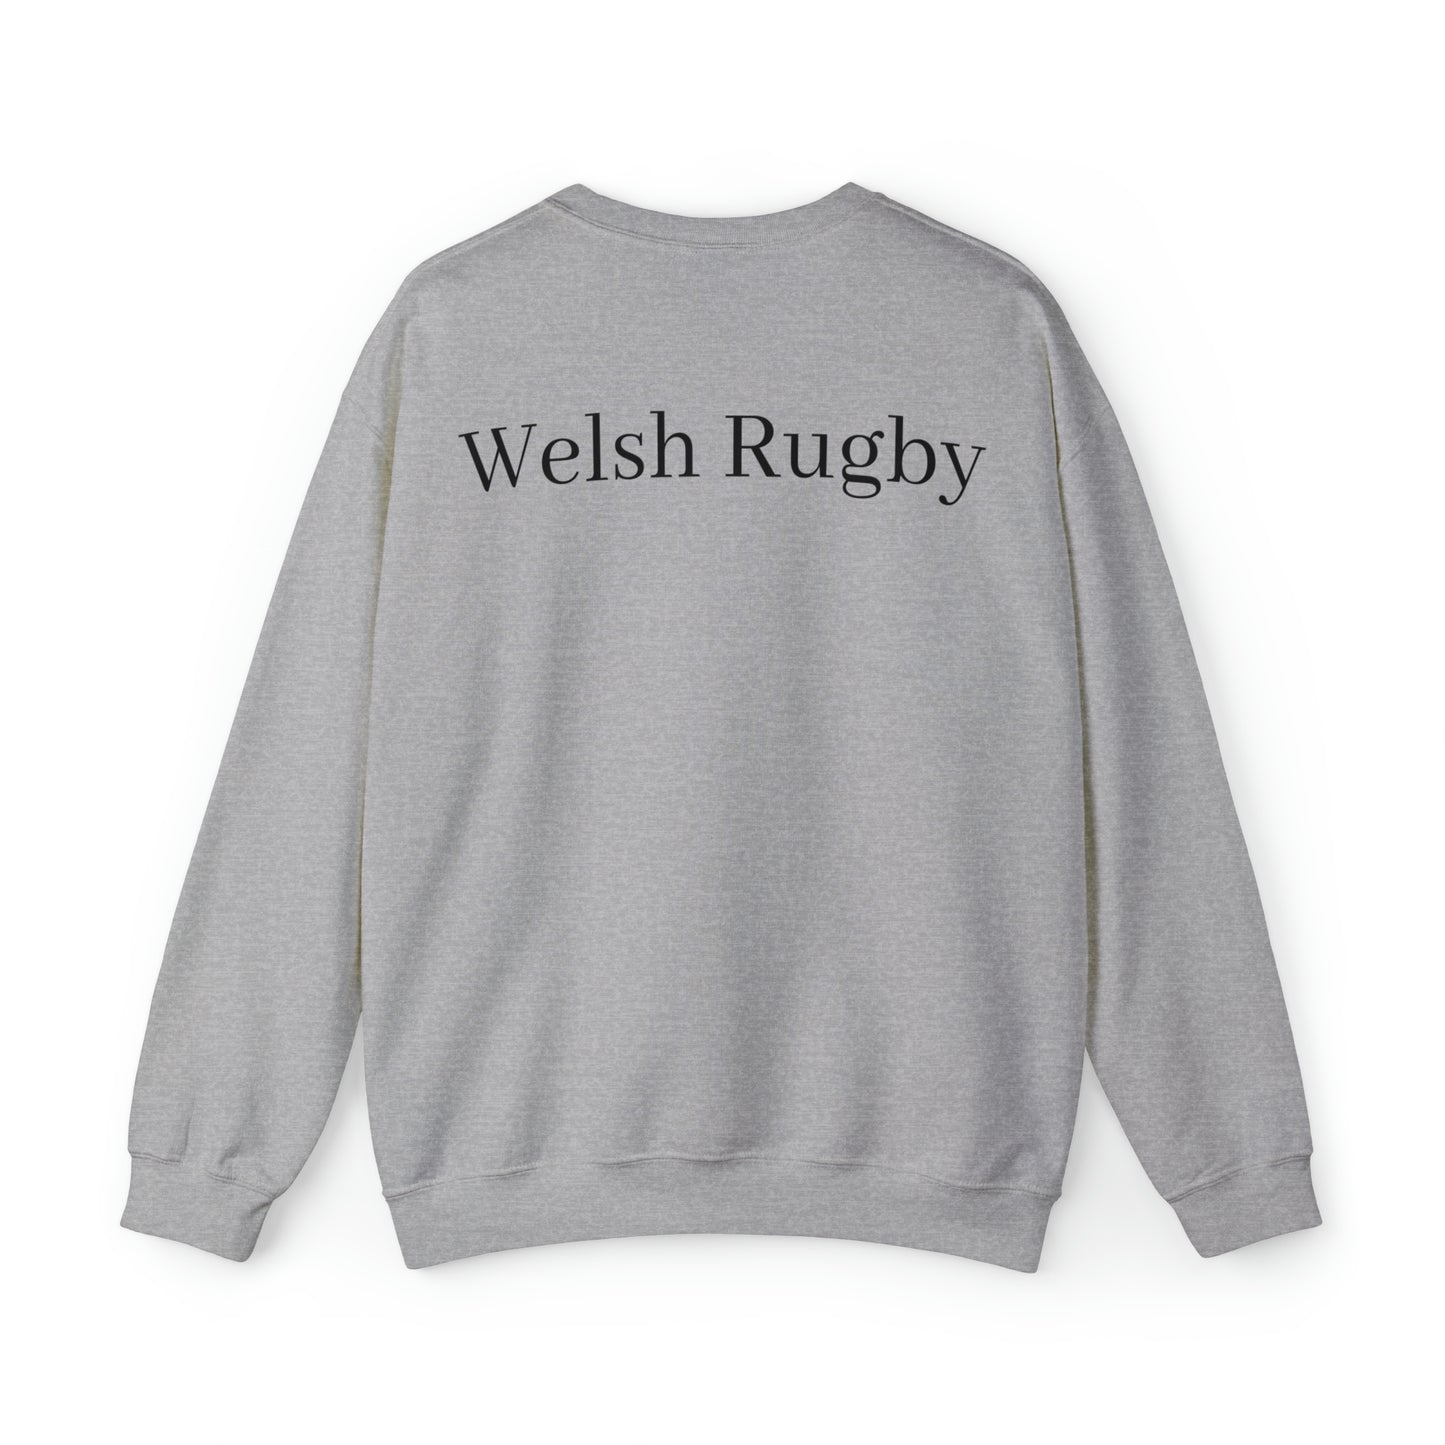 Ready Wales - light sweatshirts